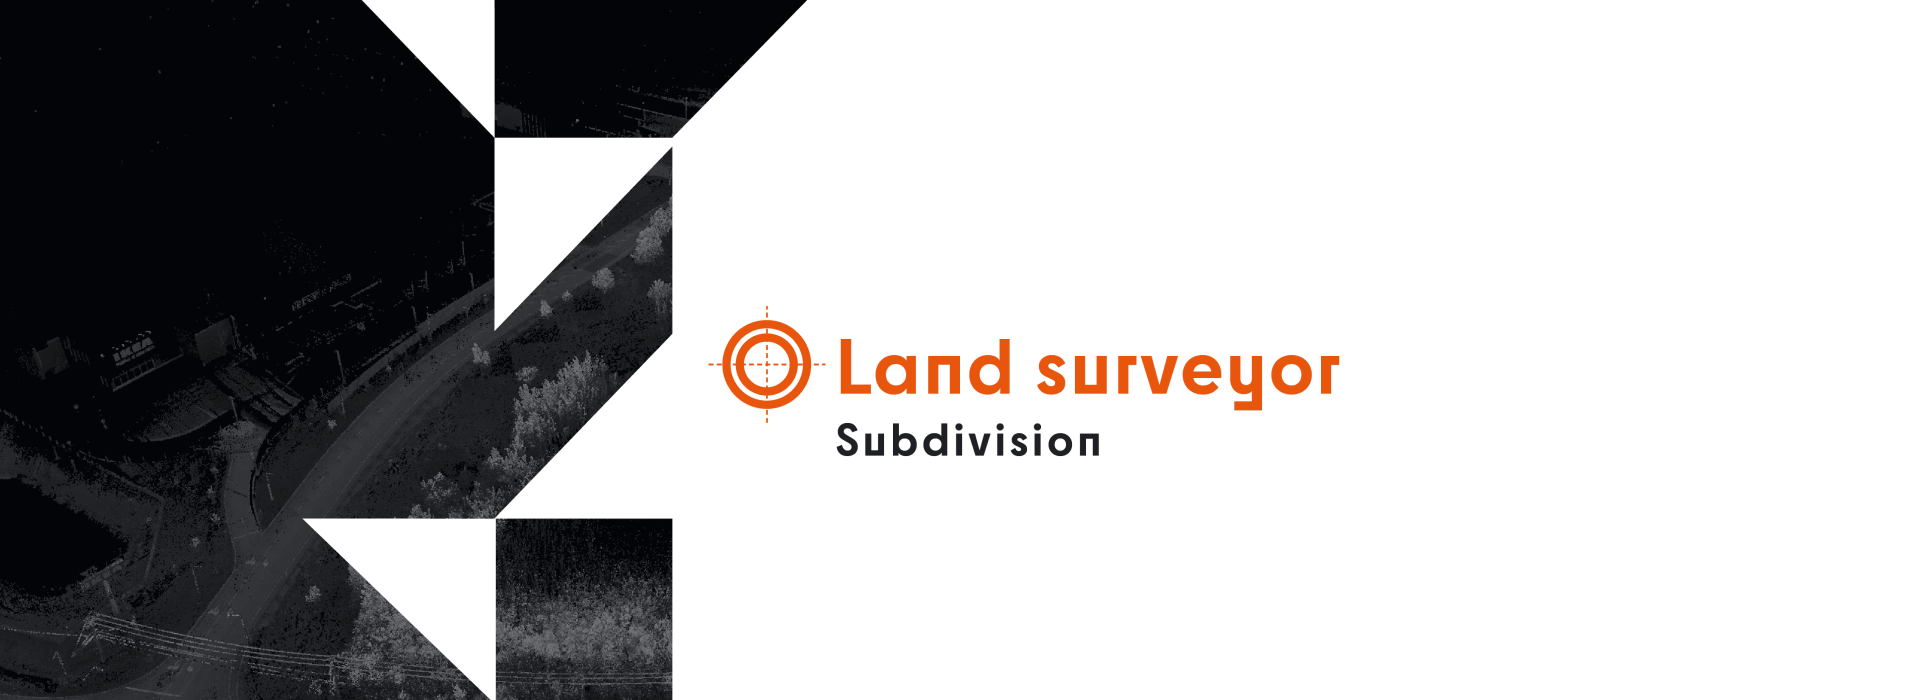 ANGLAIS_WebBanner_Land surveyor - Subdivision